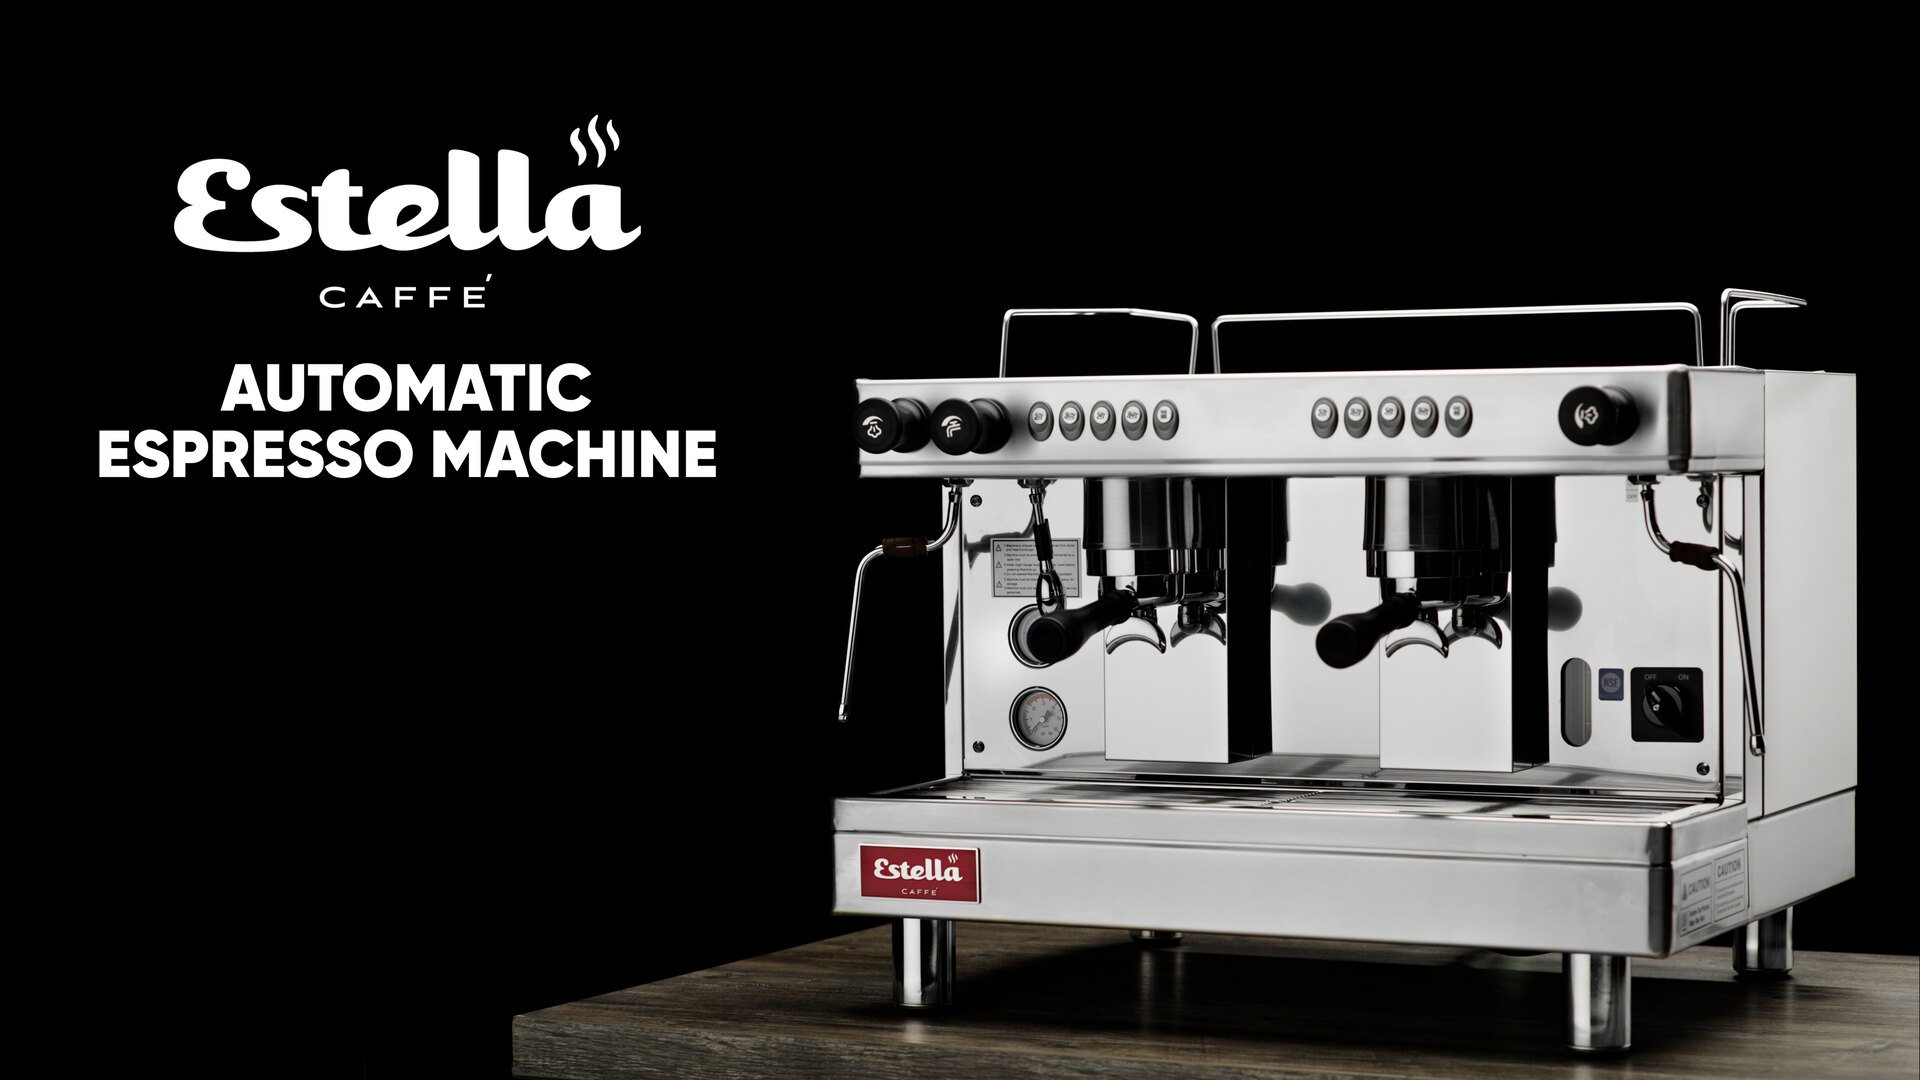 Estella Caffe ECSB-1 Automatic Single Shuttle Coffee Maker with